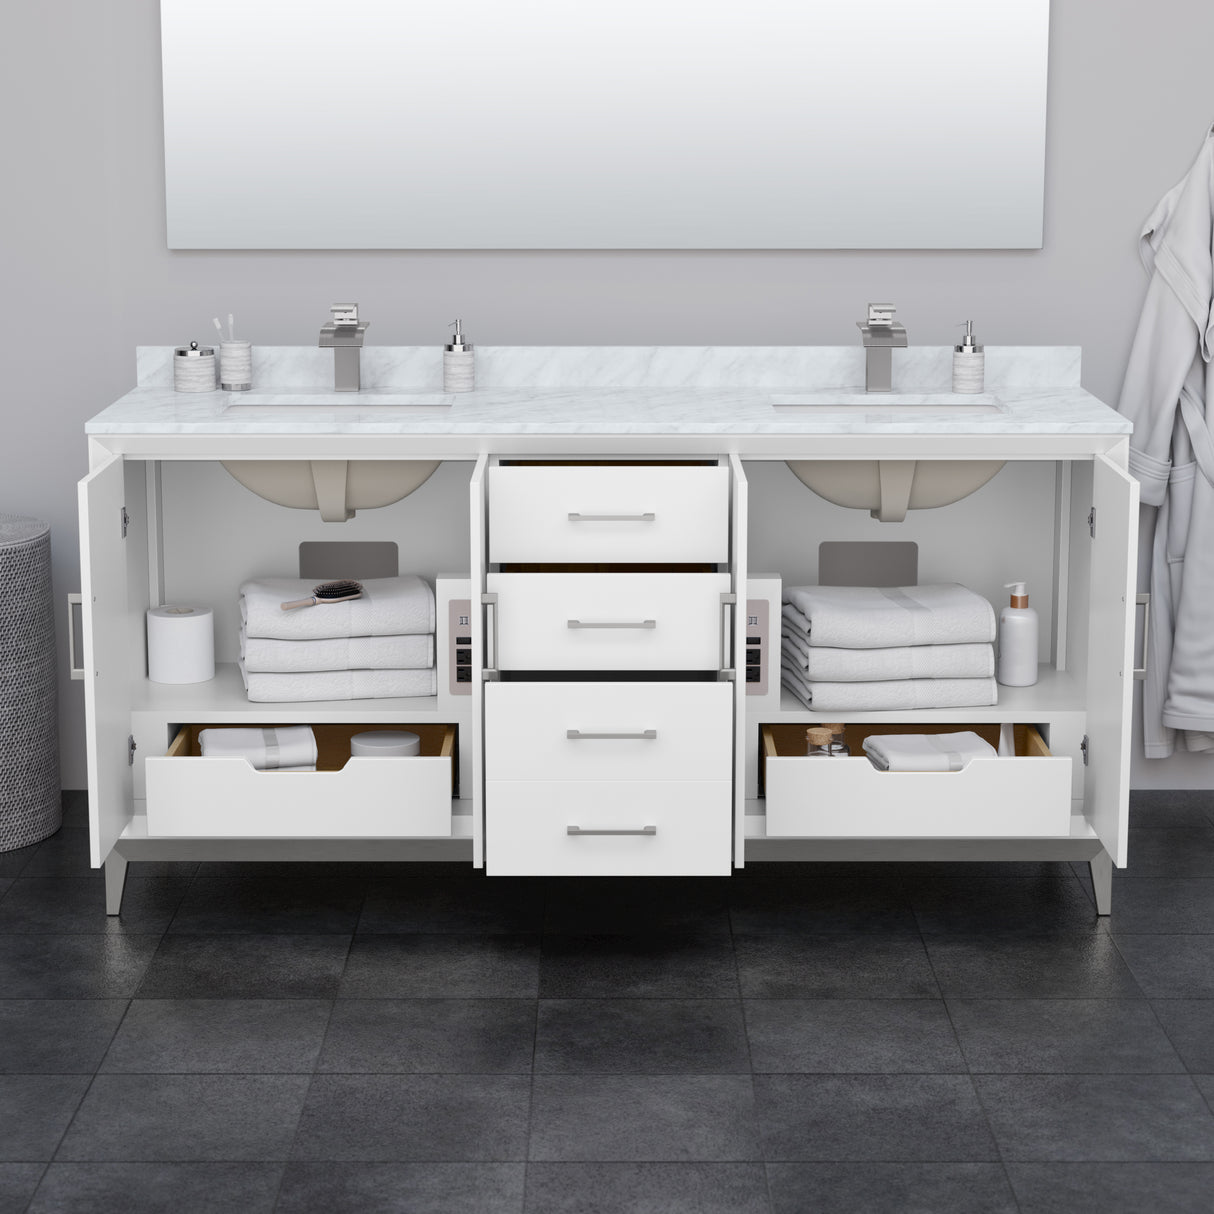 Amici 72 Inch Double Bathroom Vanity in White No Countertop No Sink Matte Black Trim